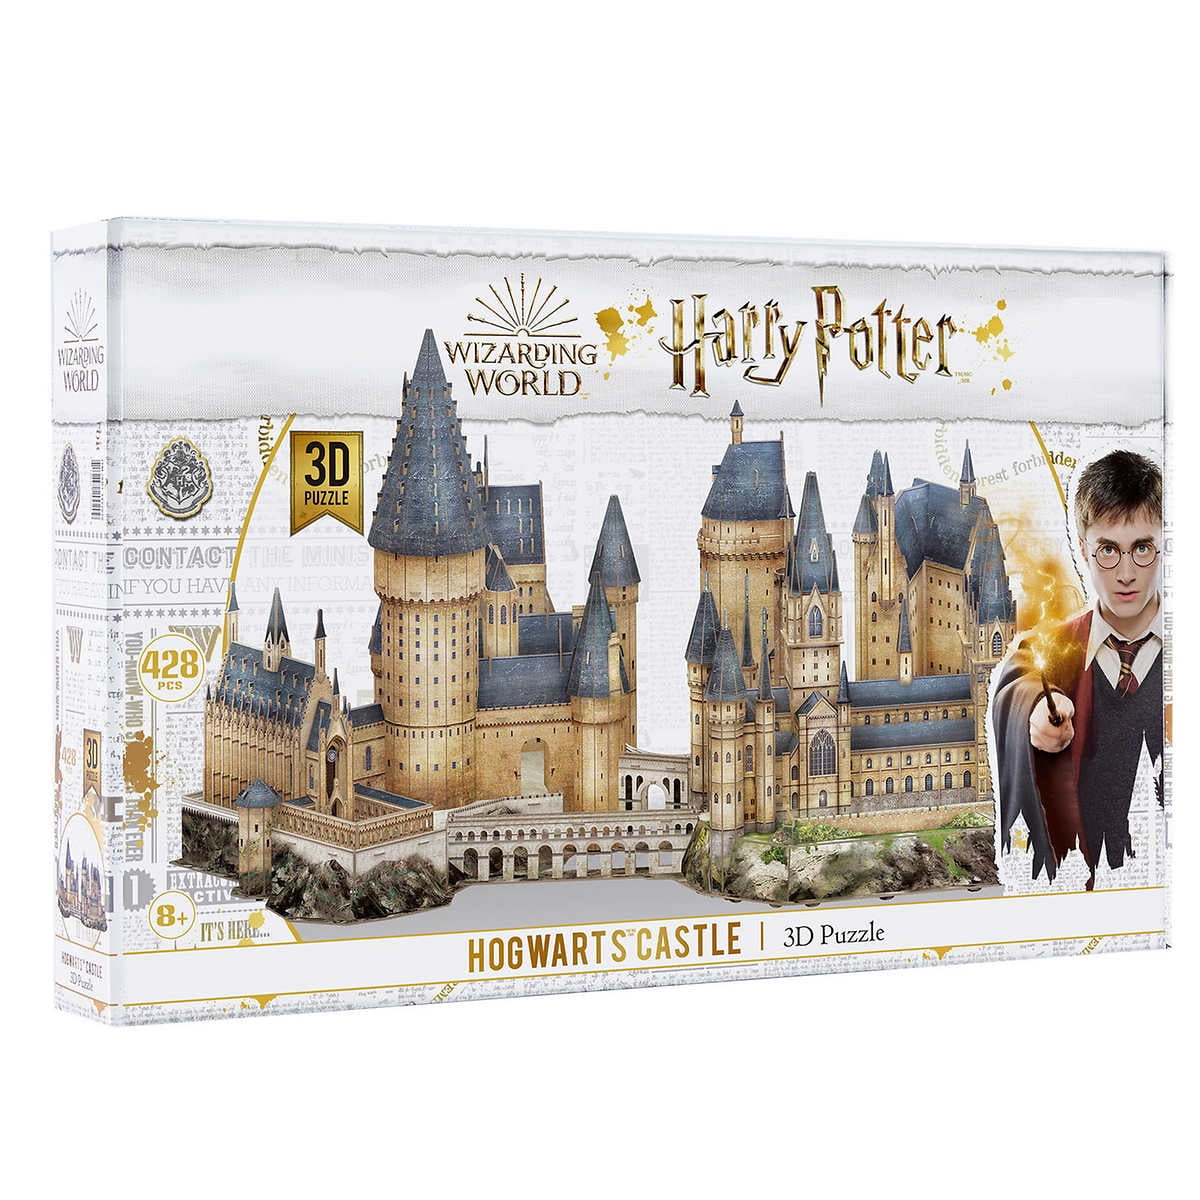 New Hogwarts Castle Wizarding World of Harry Potter 3D Puzzle 428 Pieces Large 